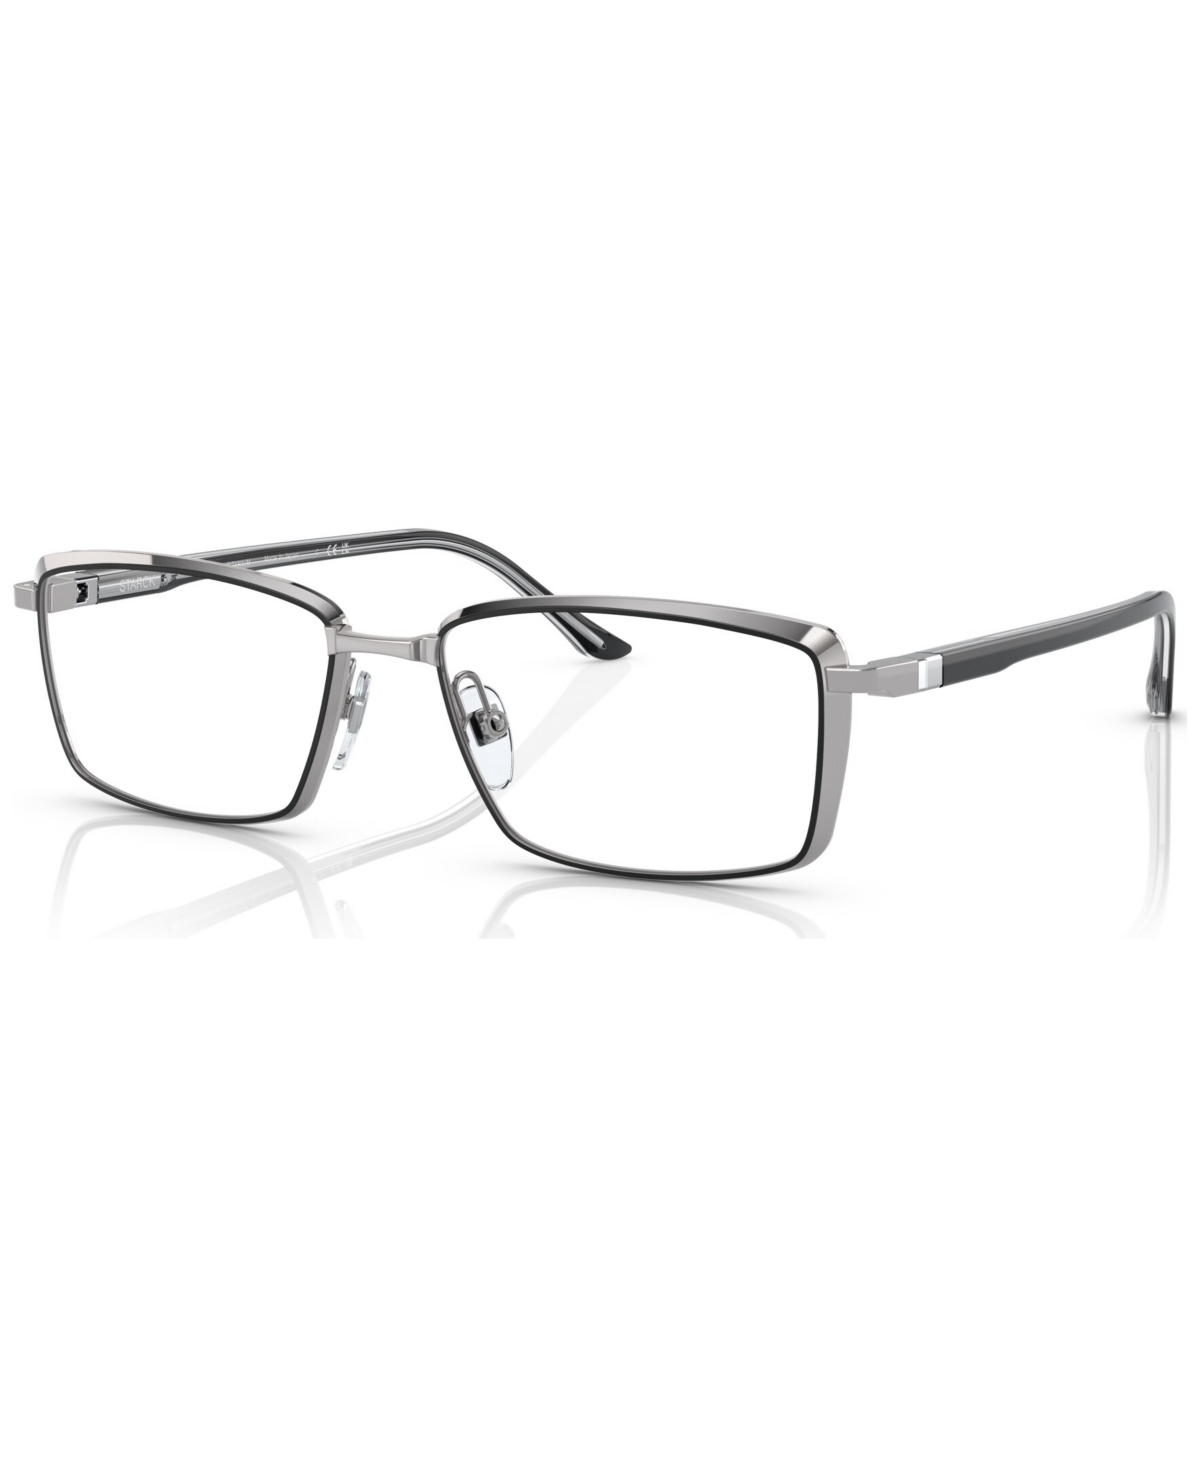 Men's Rectangle Eyeglasses, SH2071T56-o - Silver-Tone, Black